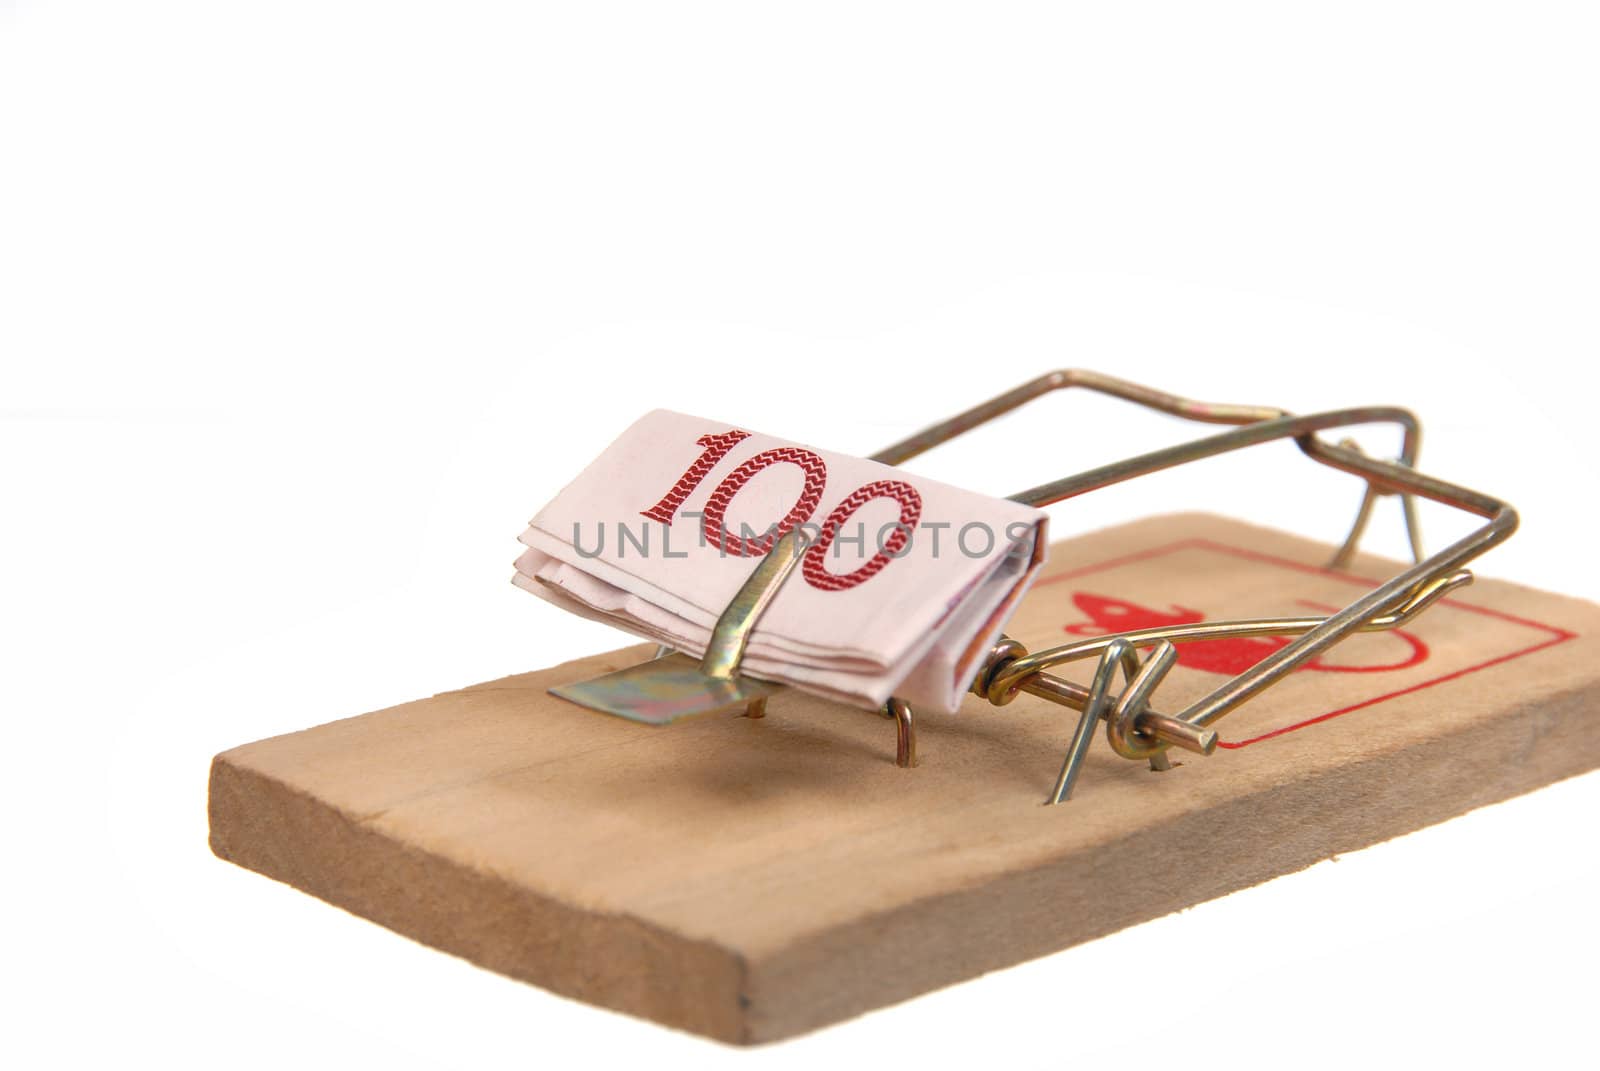 Money # 26 - in mousetrap by kekanger